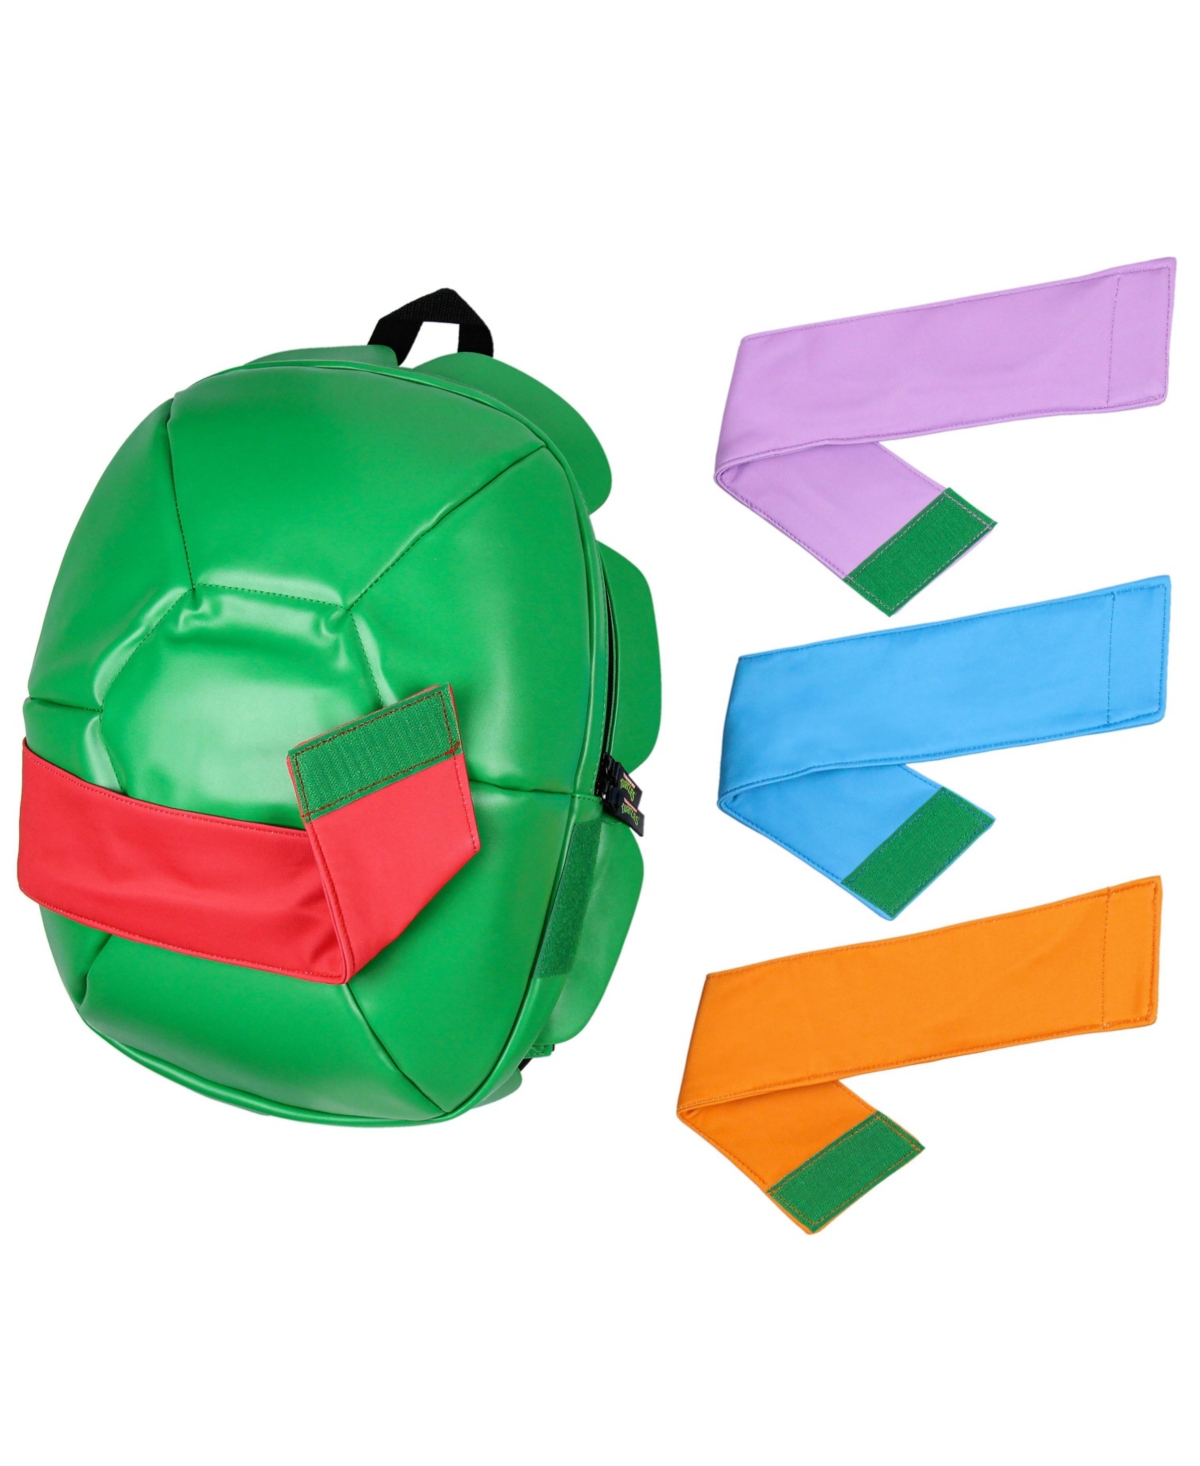 Nickelodeon Teenage Mutant Ninja Turtles Tmnt Shell Interchangeable Band Character Backpack - Green